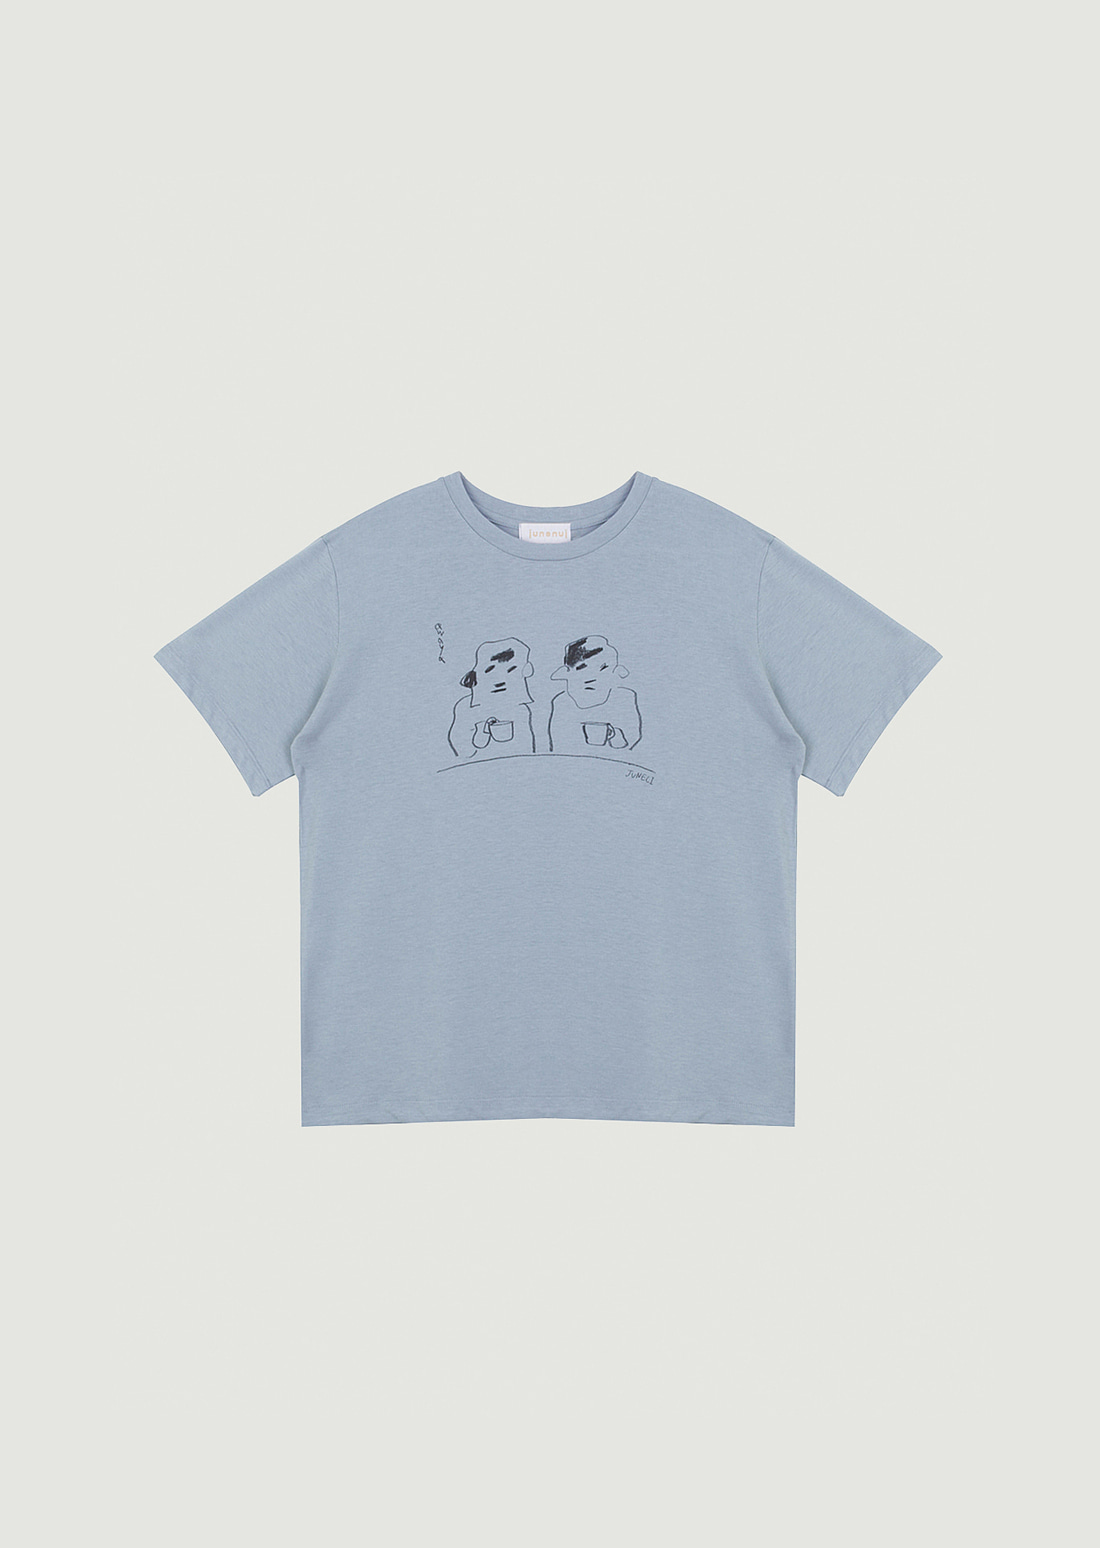 ‘Two’ Soft cotton t-shirt (Grey blue)